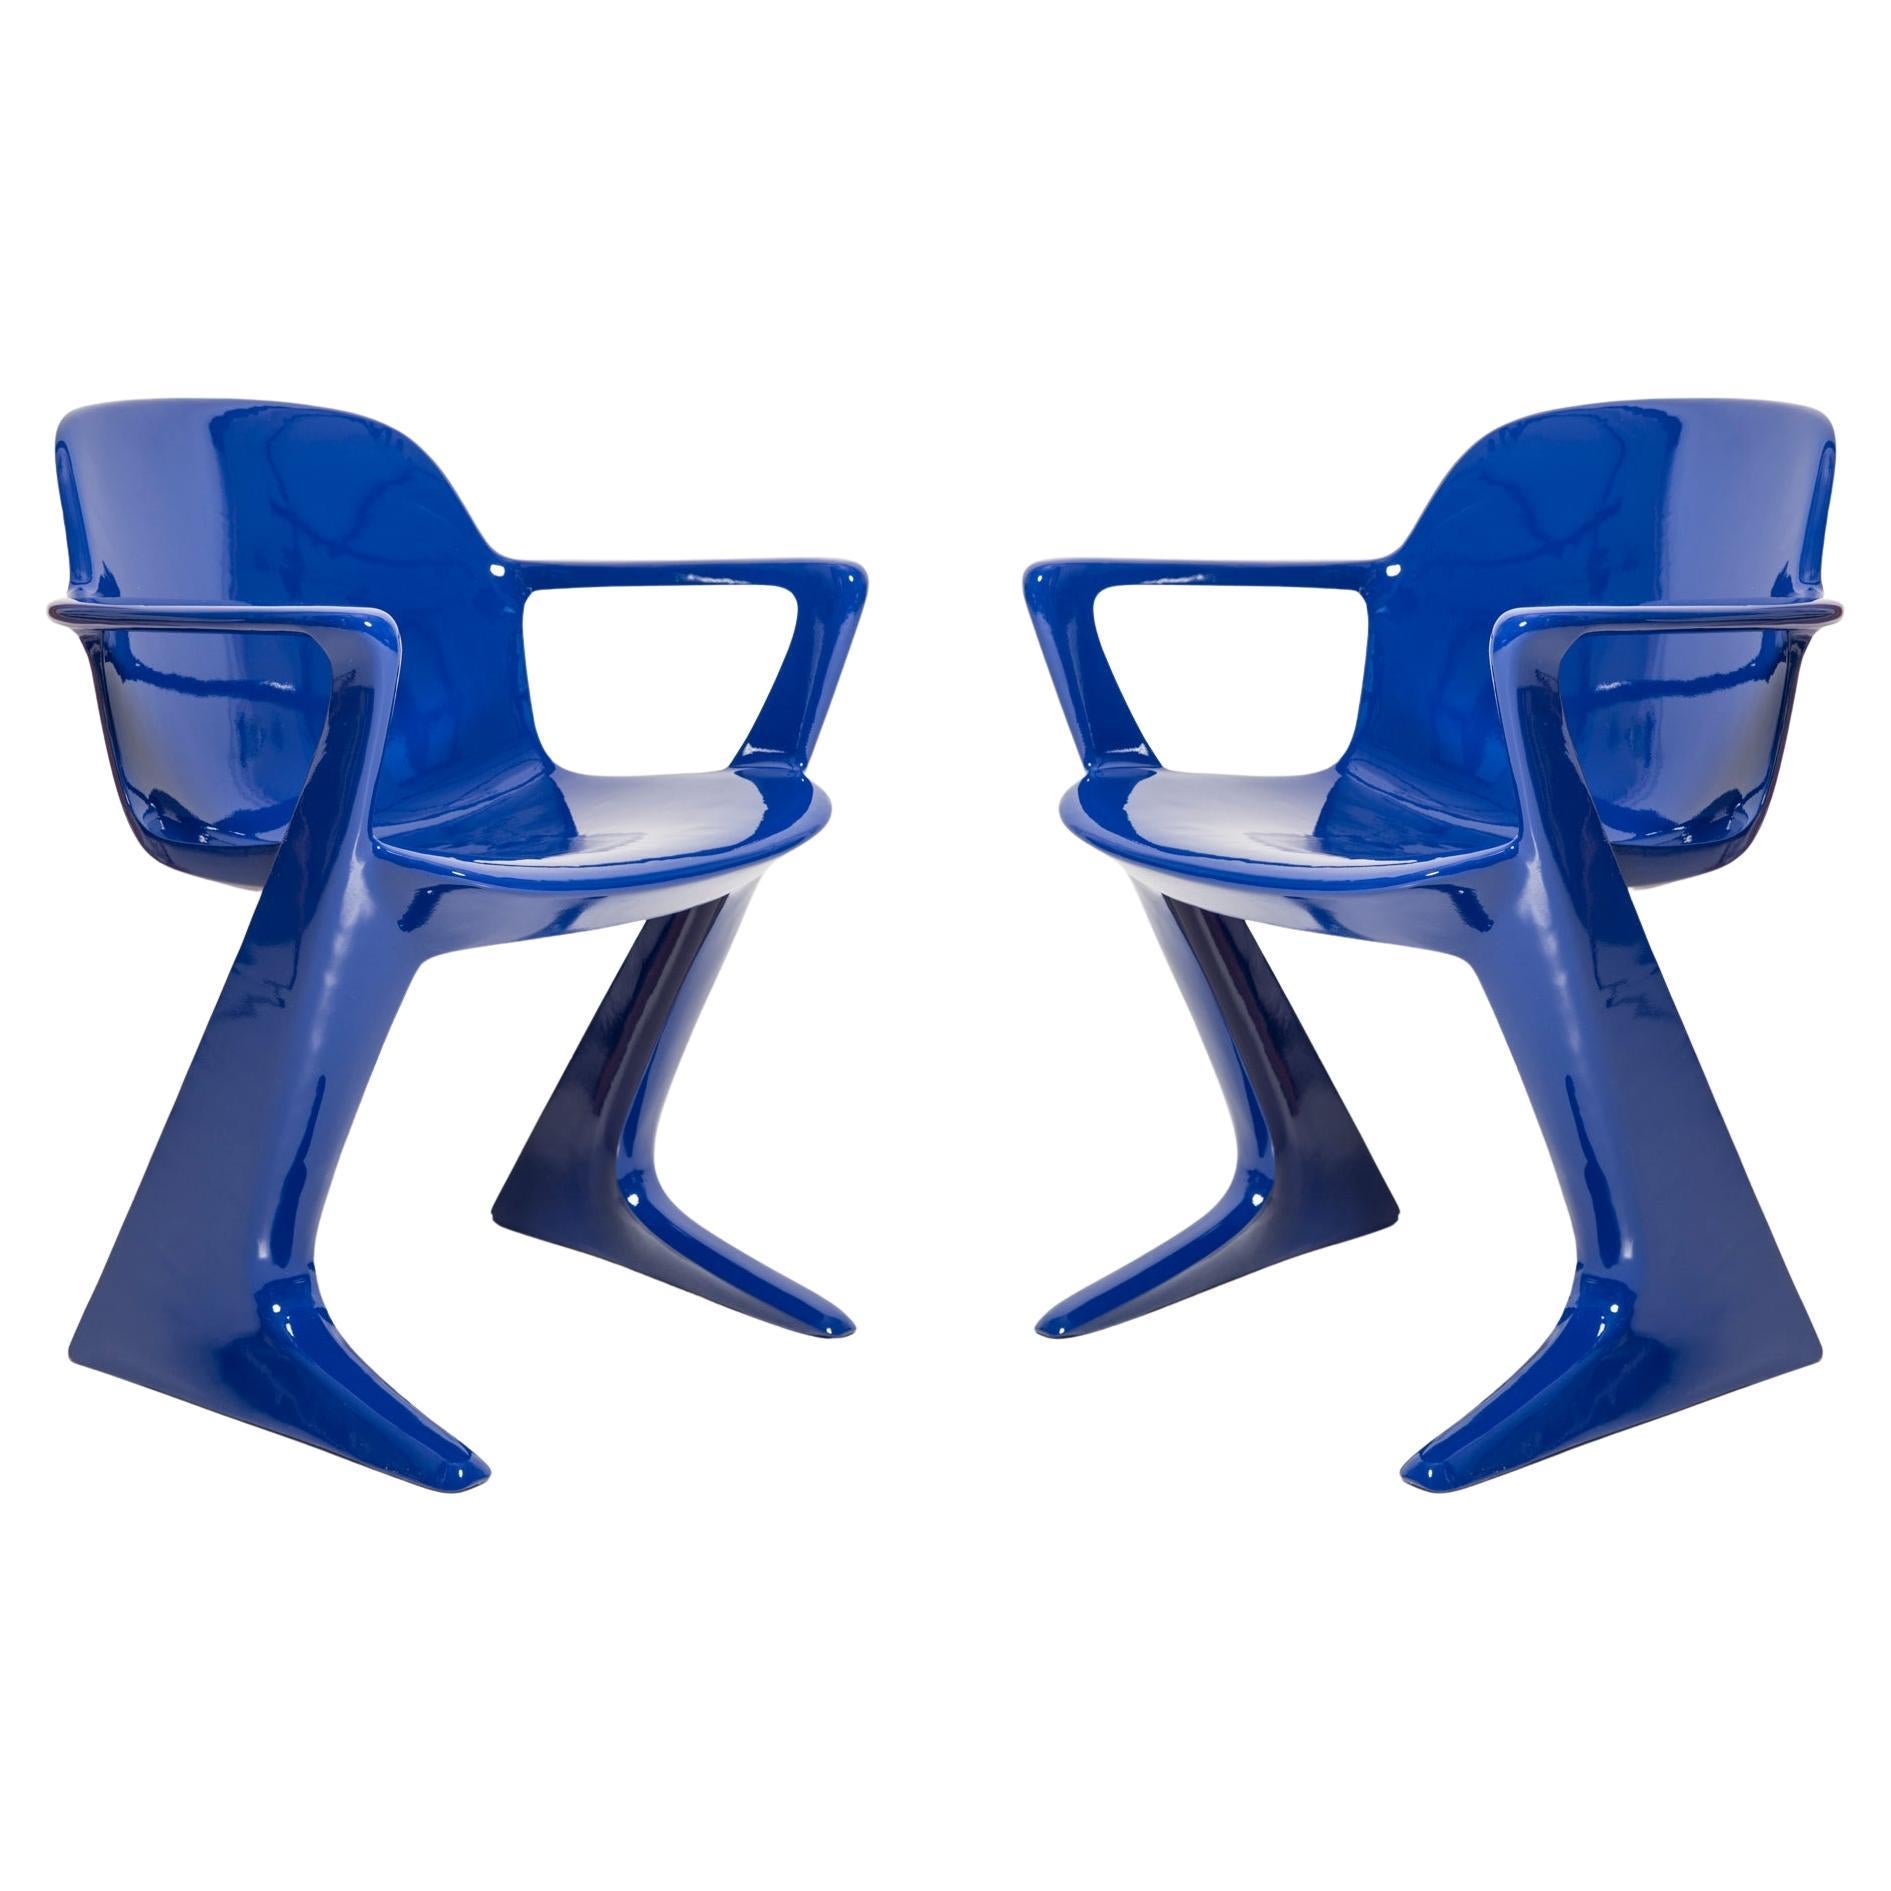 Pair of Ultramarine Blue Kangaroo Chairs Designed by Ernst Moeckl, Germany, 1968